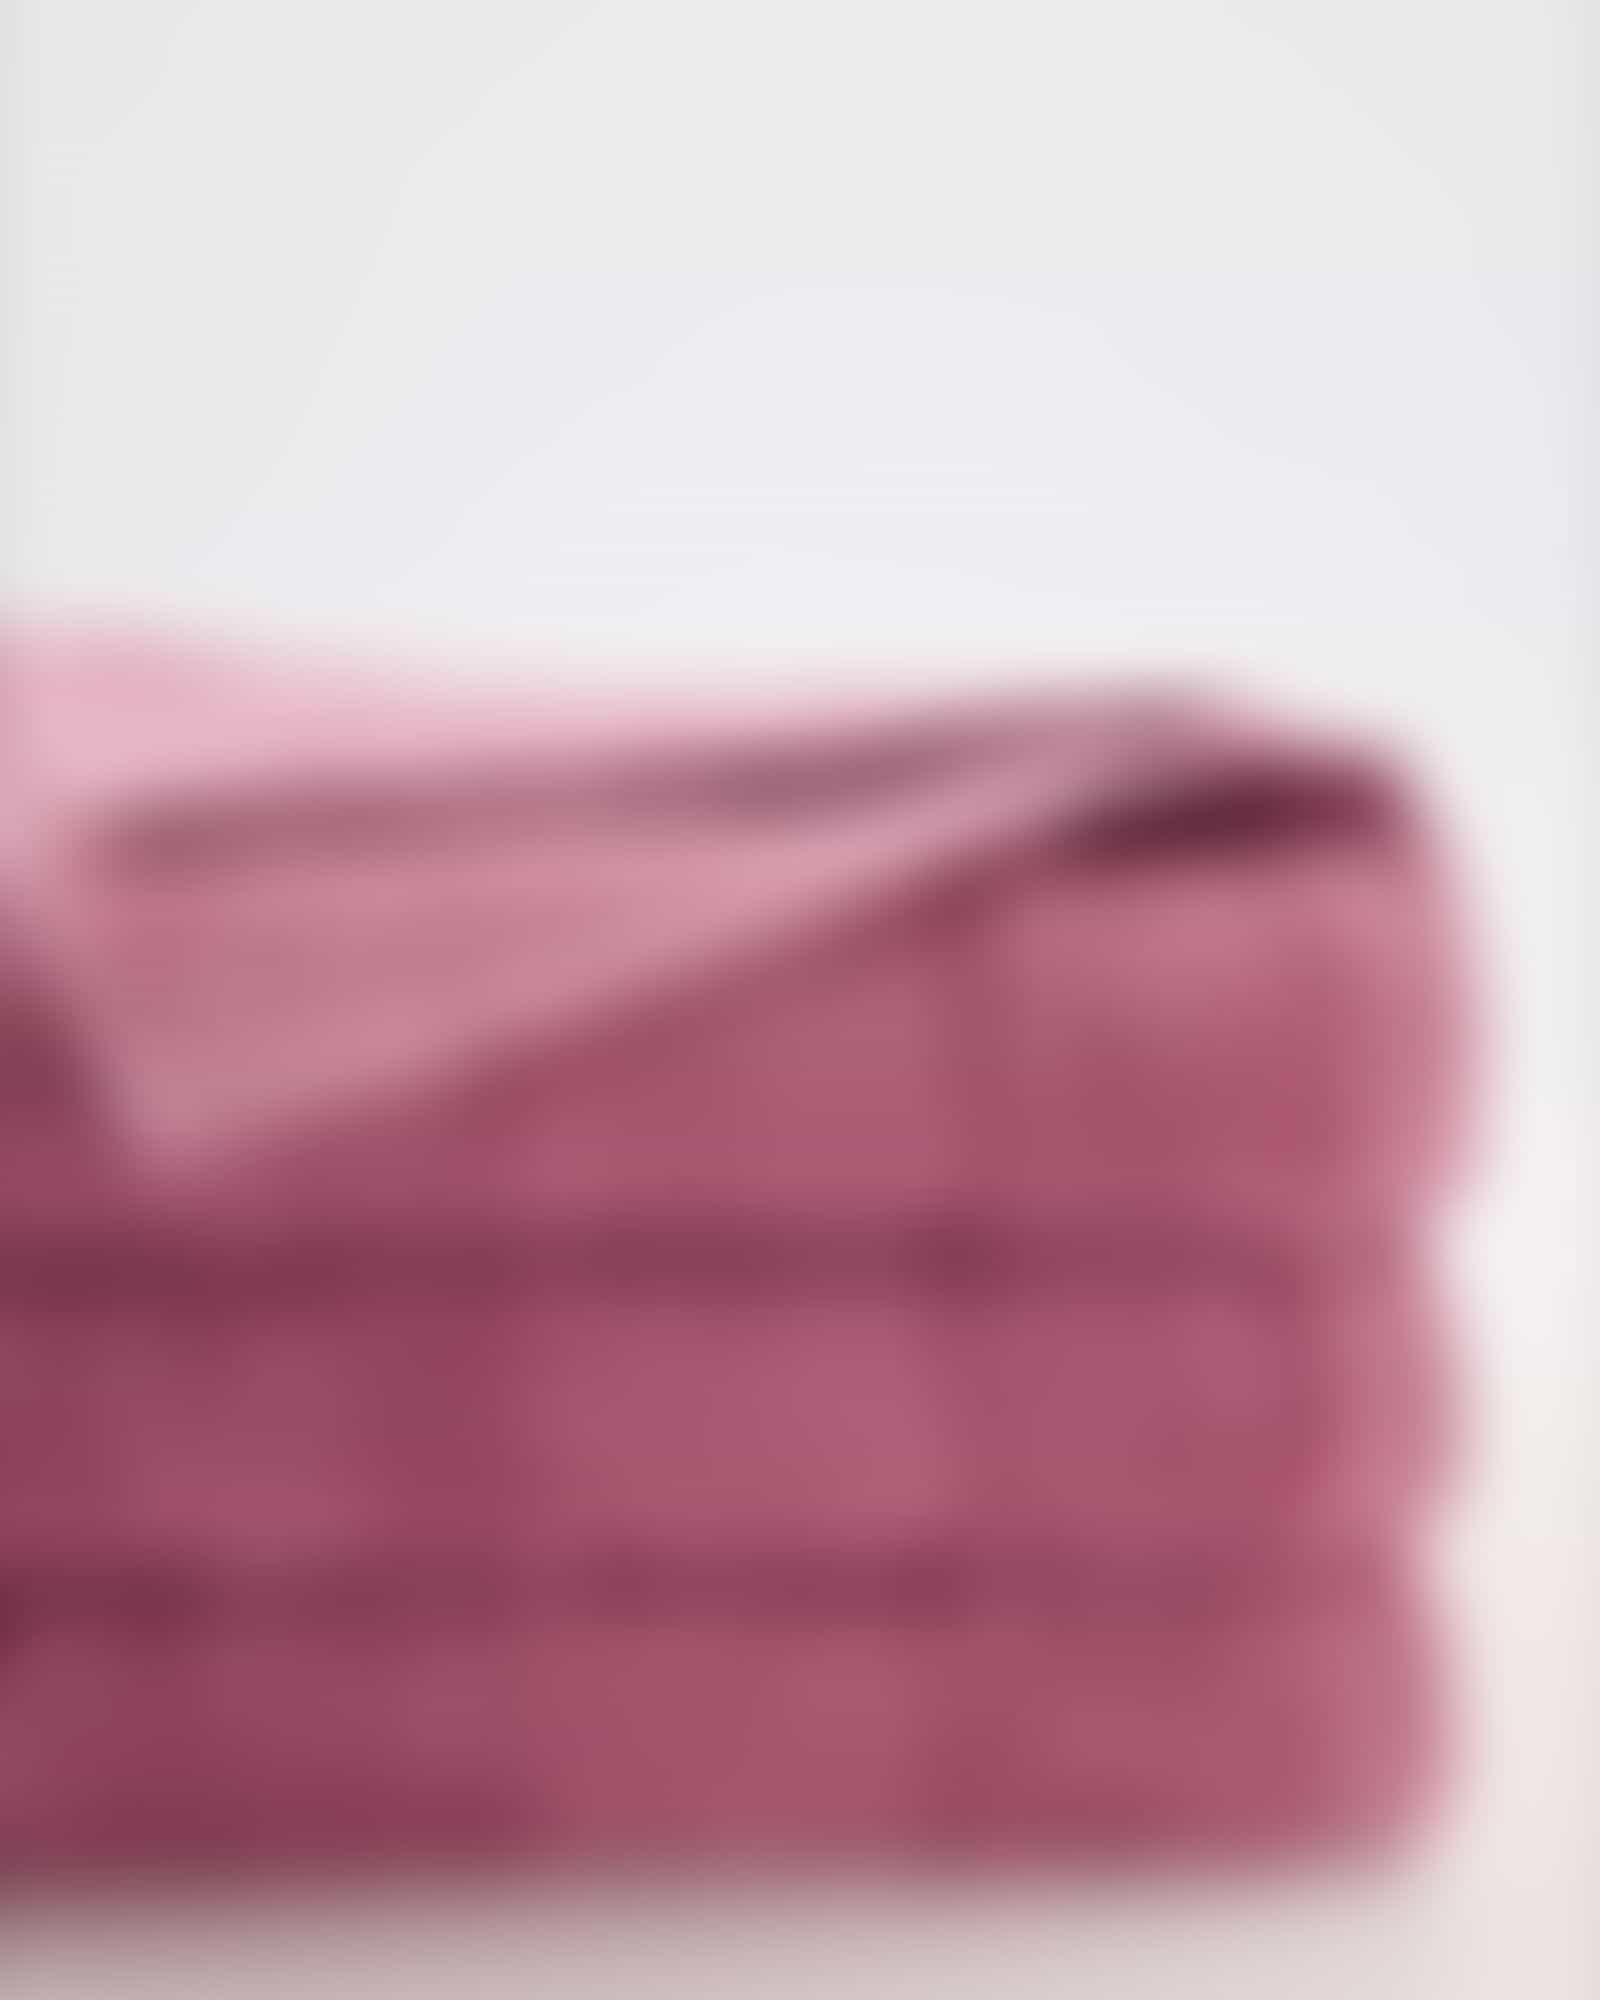 Villeroy &amp; Boch Handtücher One 2550 - Farbe: rose sauvage - 236 - Gästetuch 30x50 cm